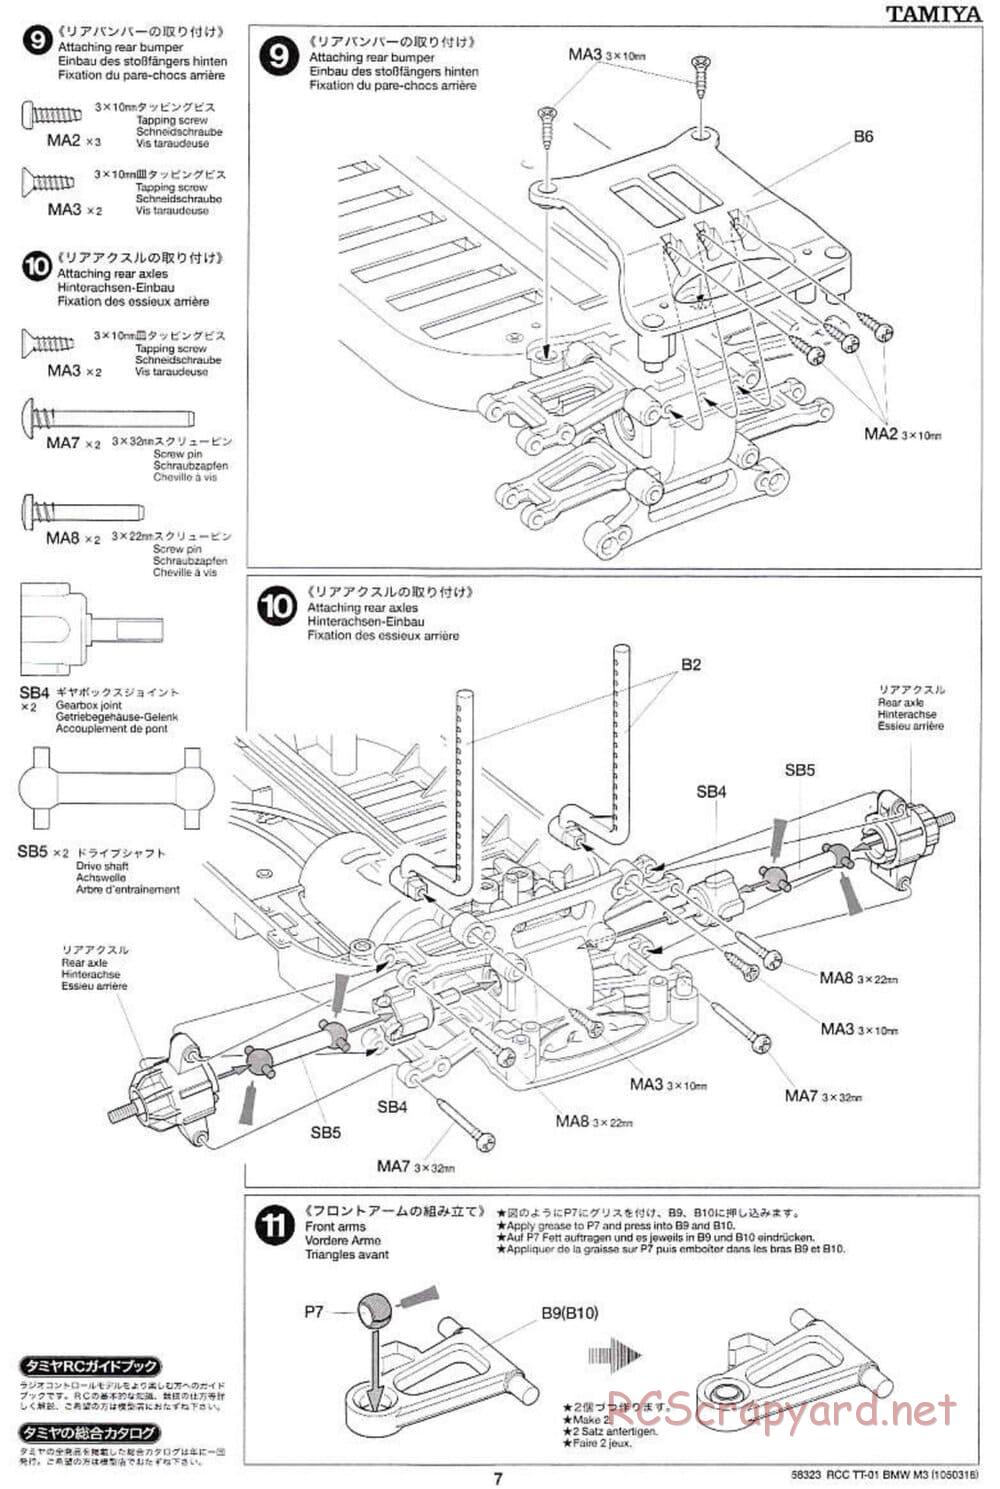 Tamiya - Schnitzer BMW M3 Sport Evo - TT-01 Chassis - Manual - Page 7